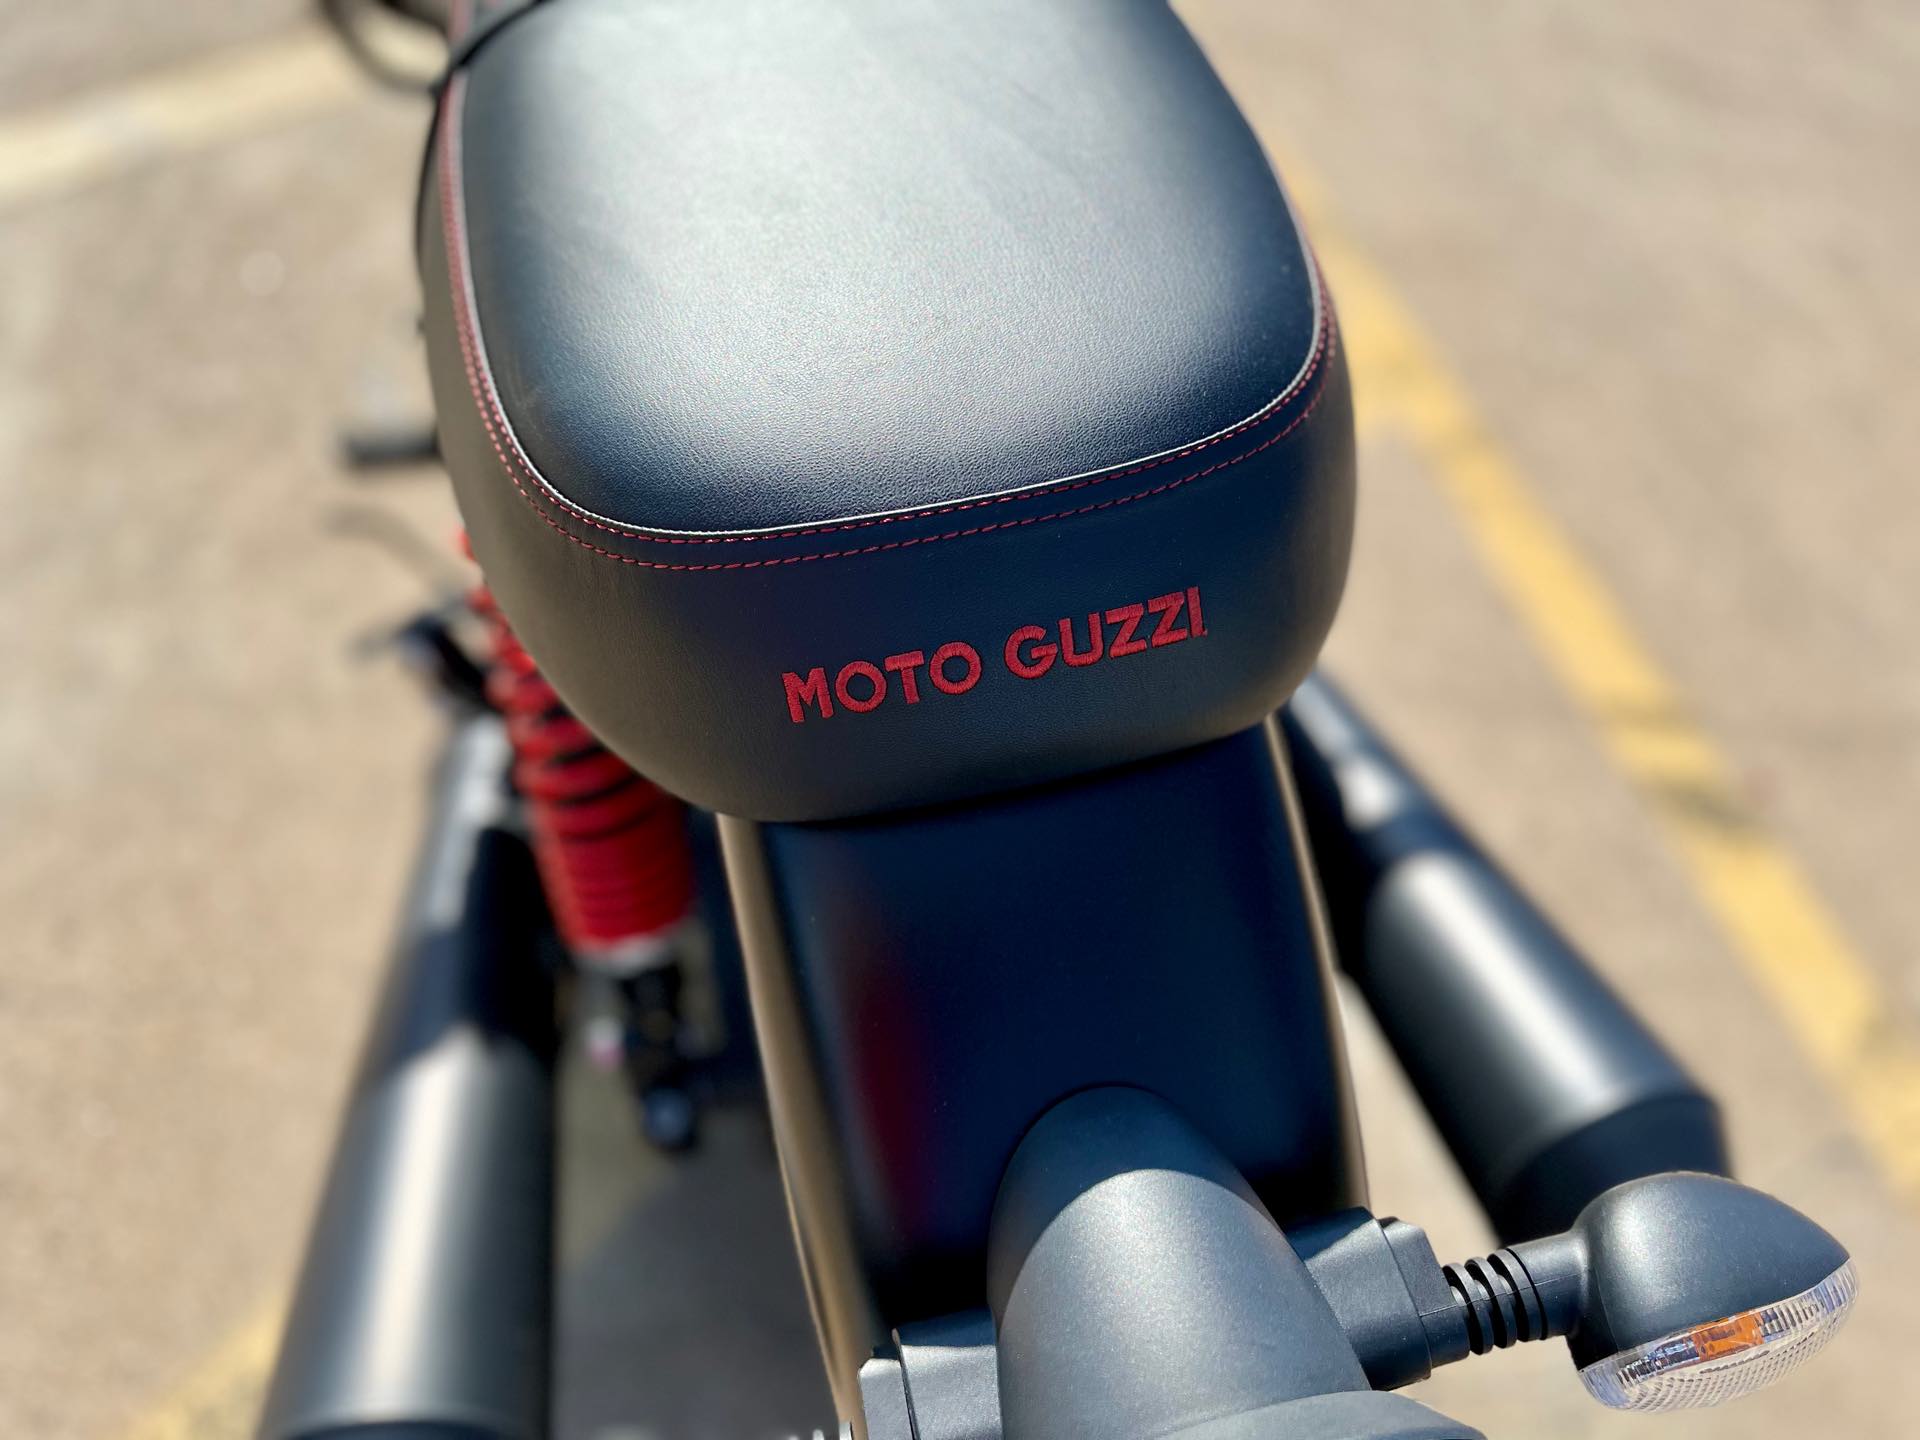 2020 Moto Guzzi V7 III Stone S at Wild West Motoplex